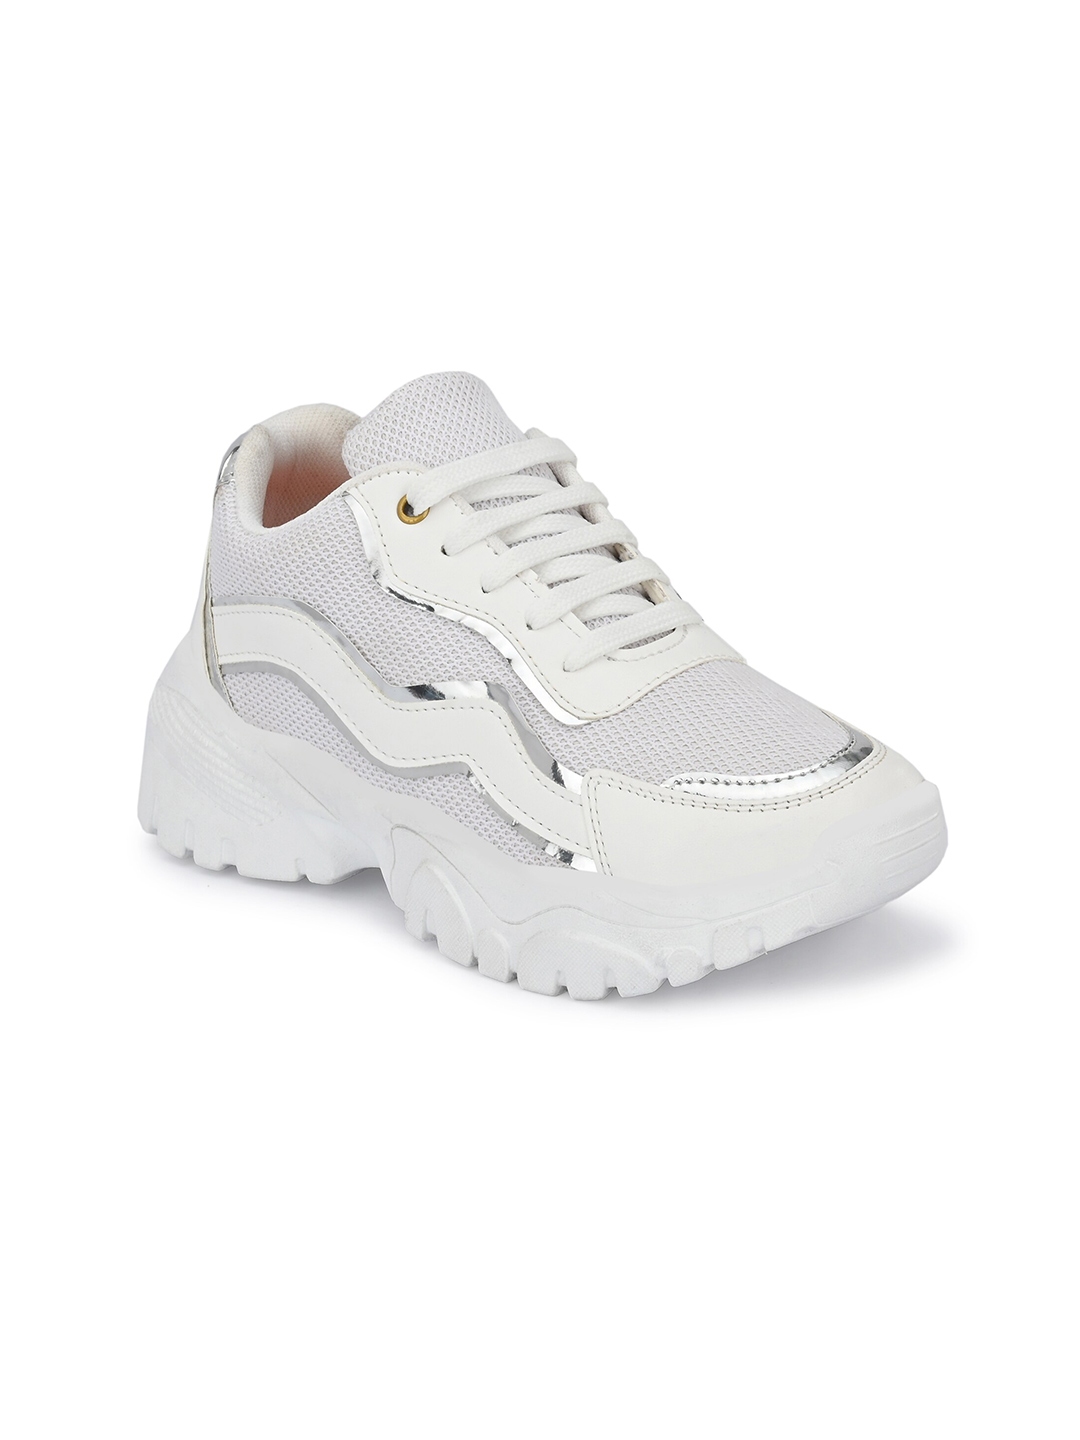 Buy AfroJack Women White Running Shoes - Sports Shoes for Women ...